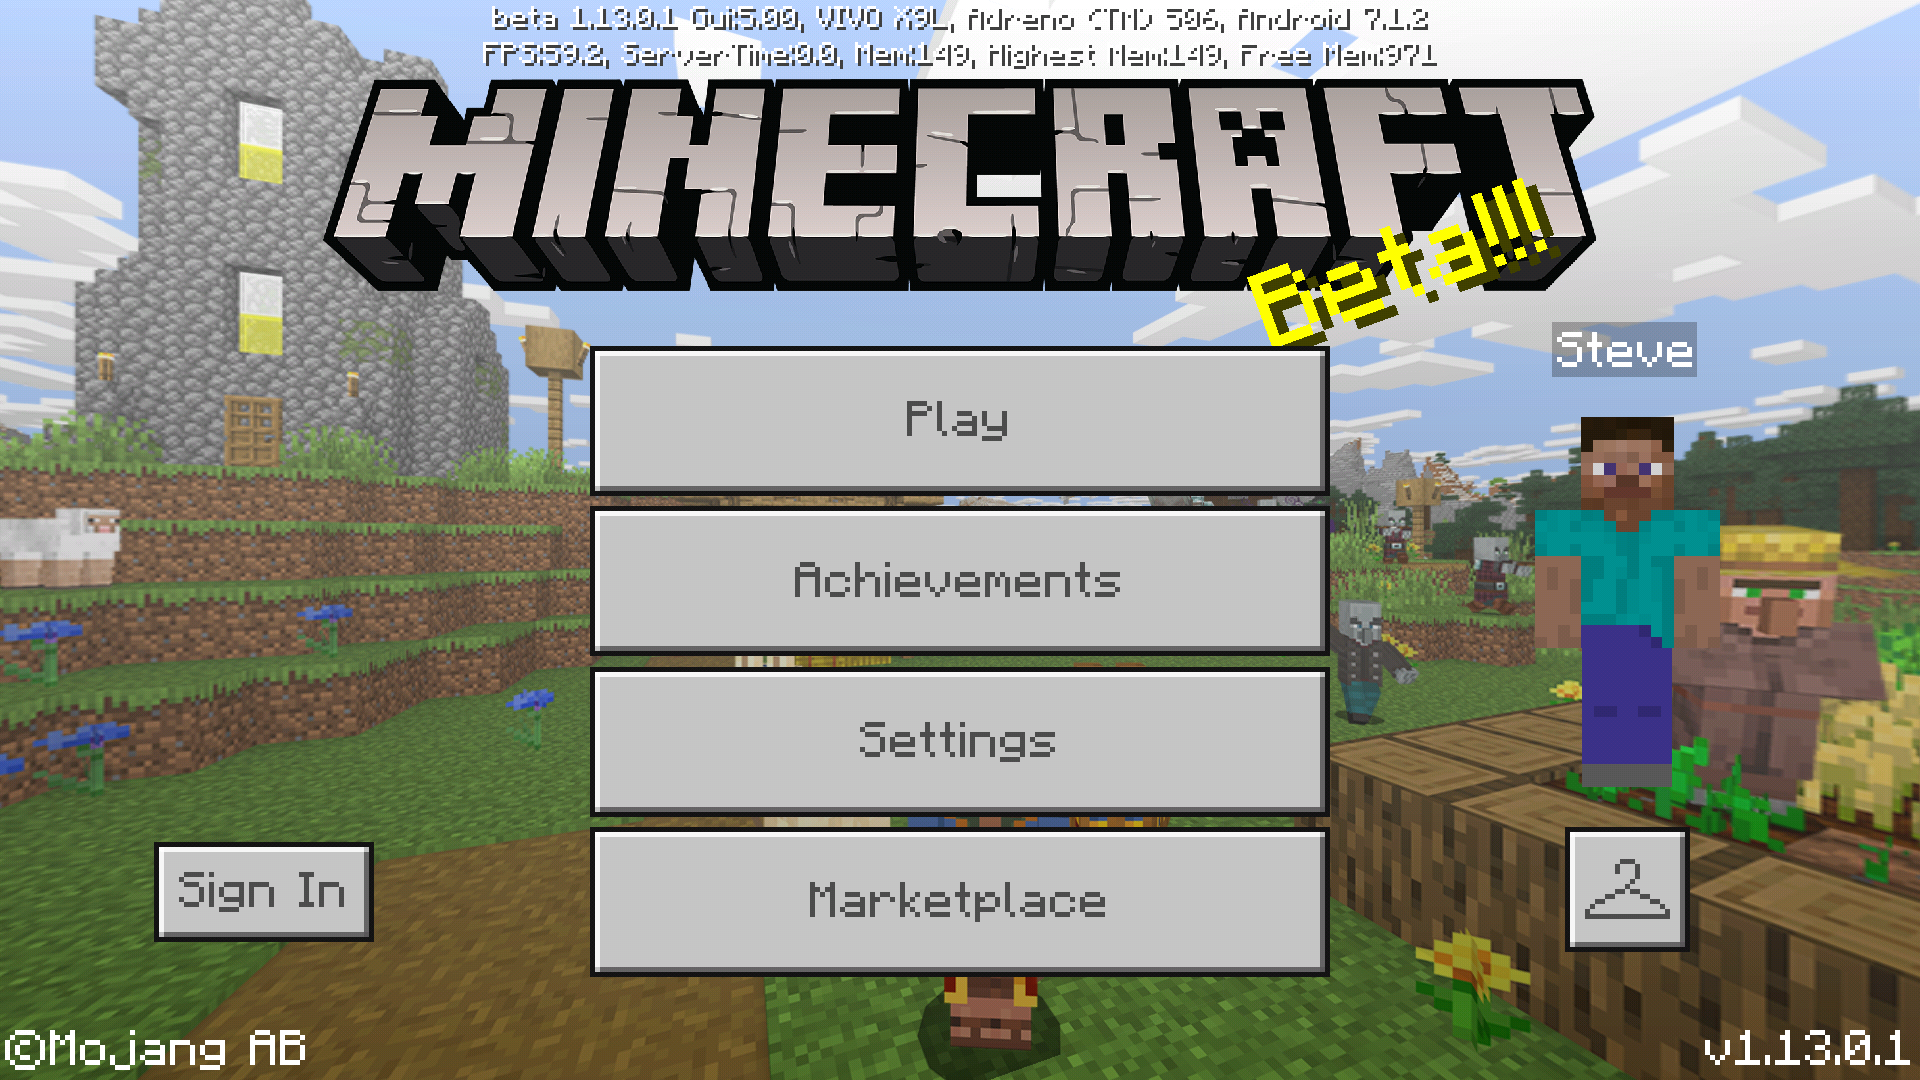 Download Minecraft 1.18.1 Free - Bedrock Edition 1.18.1 APK